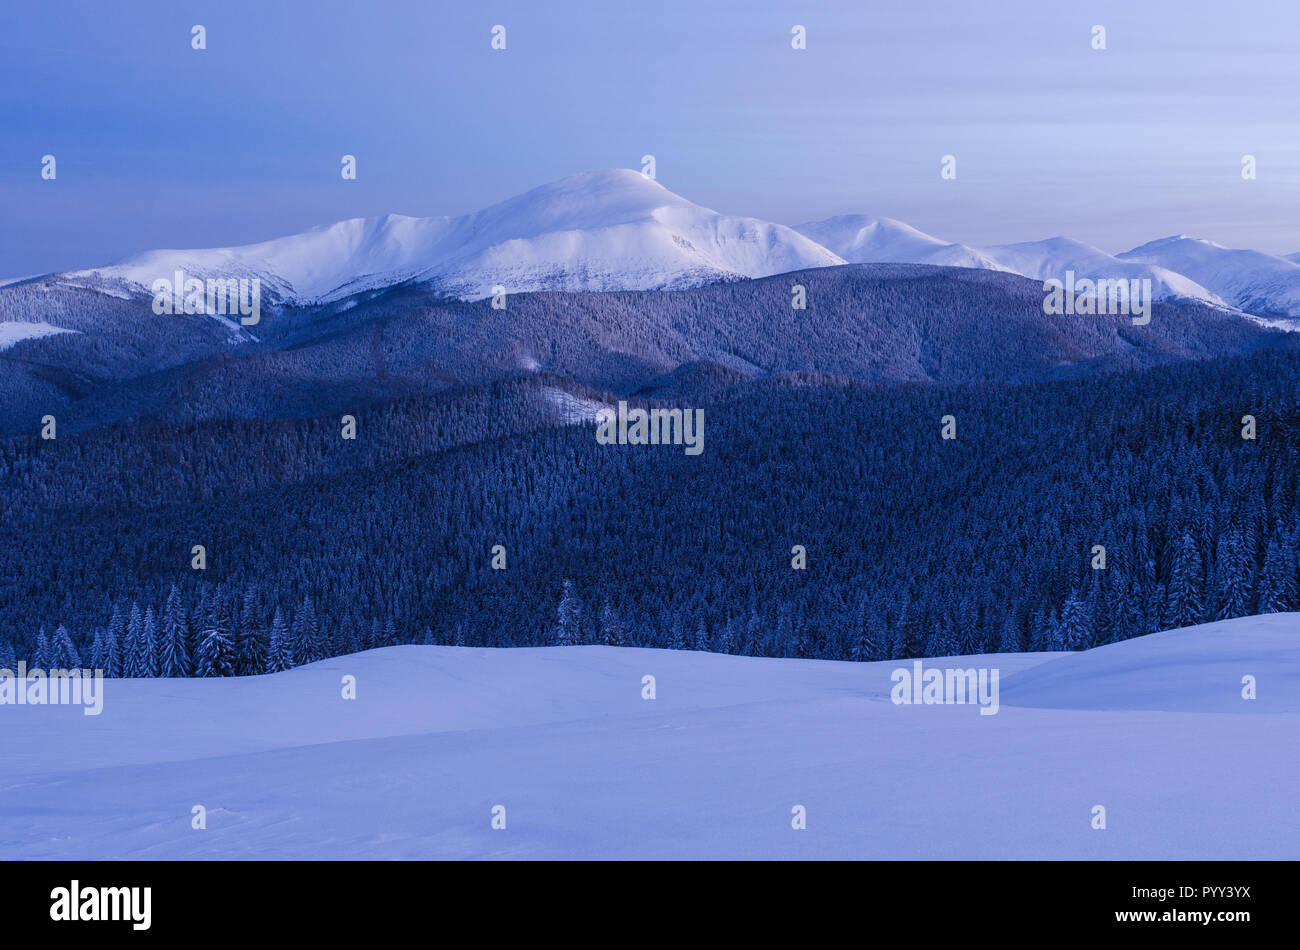 Vista de la montaña. Paisaje invernal negruzcas. Spruce Forest y Ridge en la nieve. Foto de stock